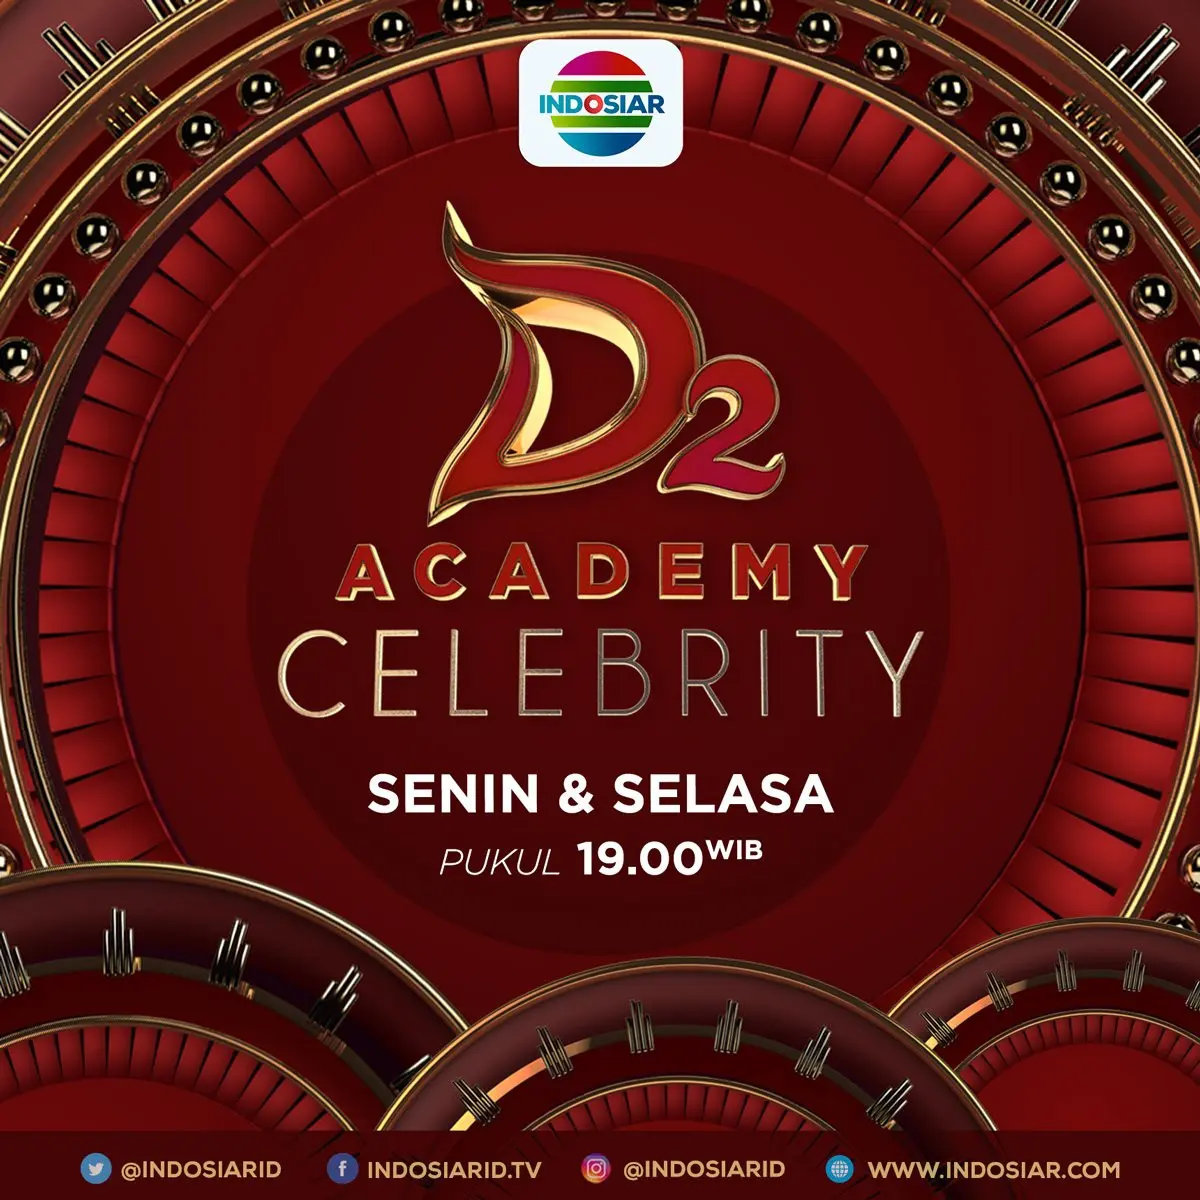 D'Academy Celebrity 2 (Twitter/IndosiarID)